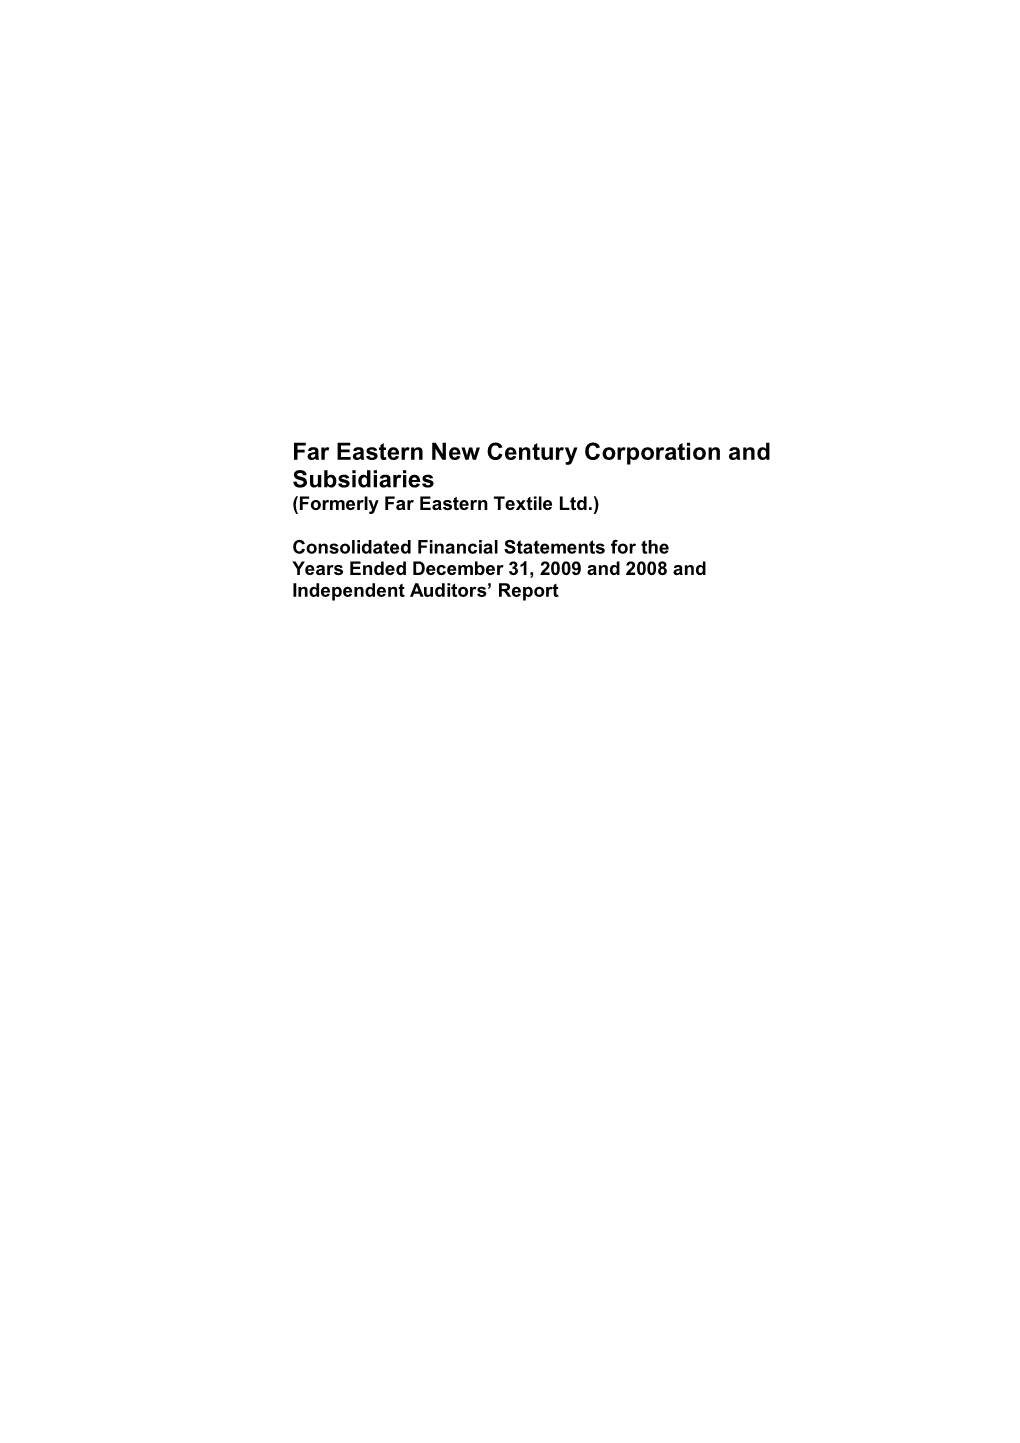 Far Eastern New Century Corporation and Subsidiaries (Formerly Far Eastern Textile Ltd.)